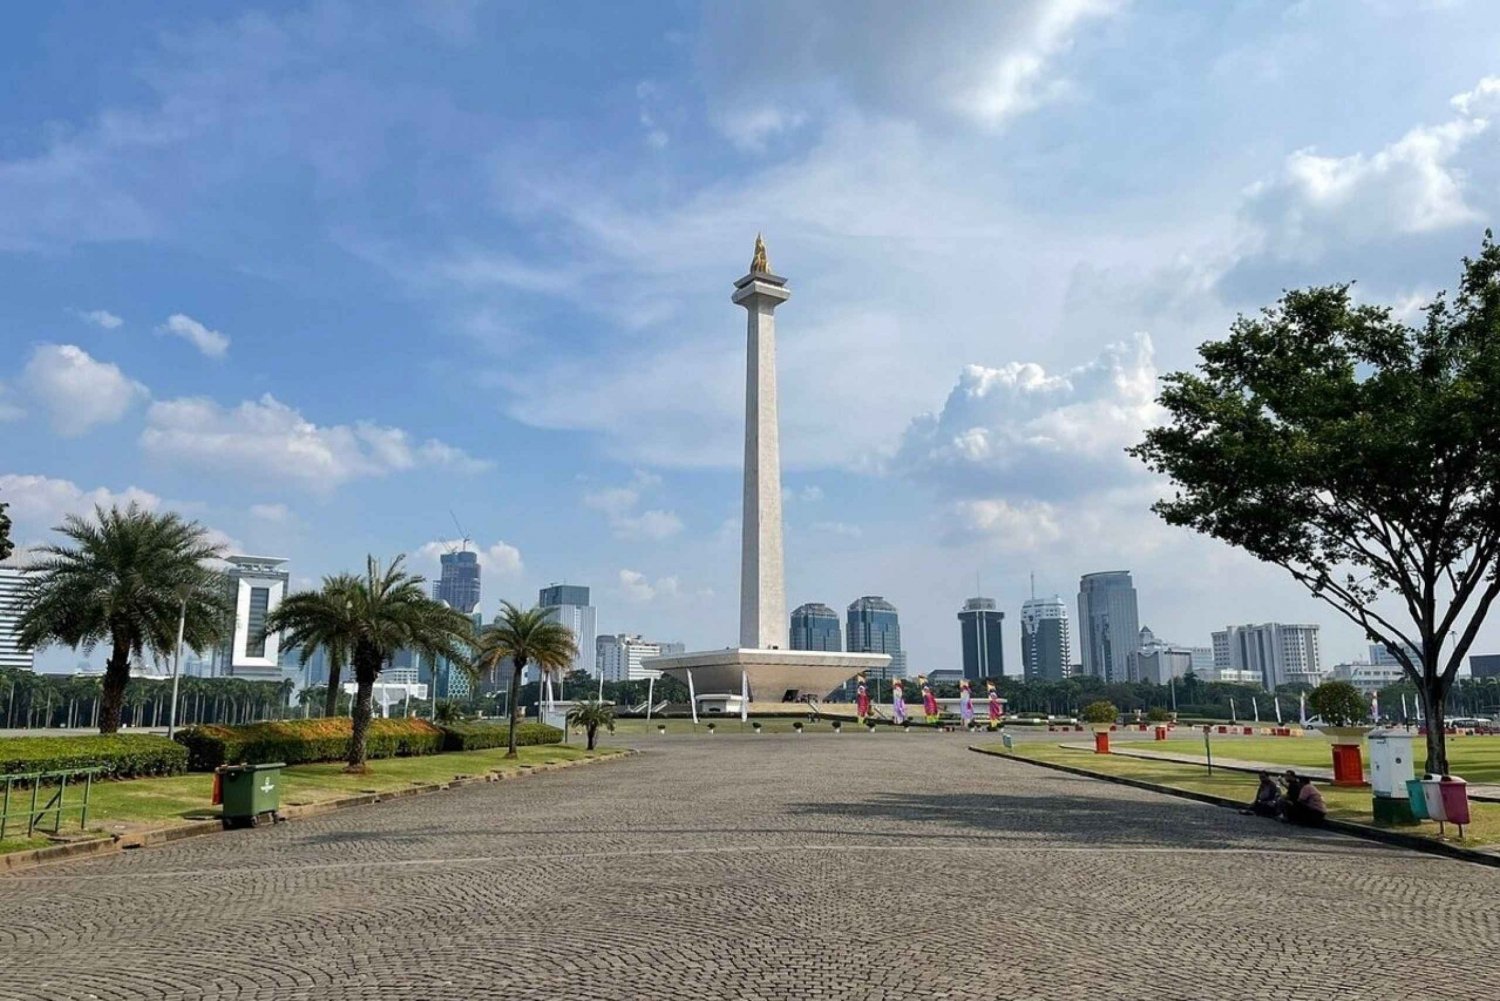 Jakarta: Private Half-Day Tour Highlight of Jakarta